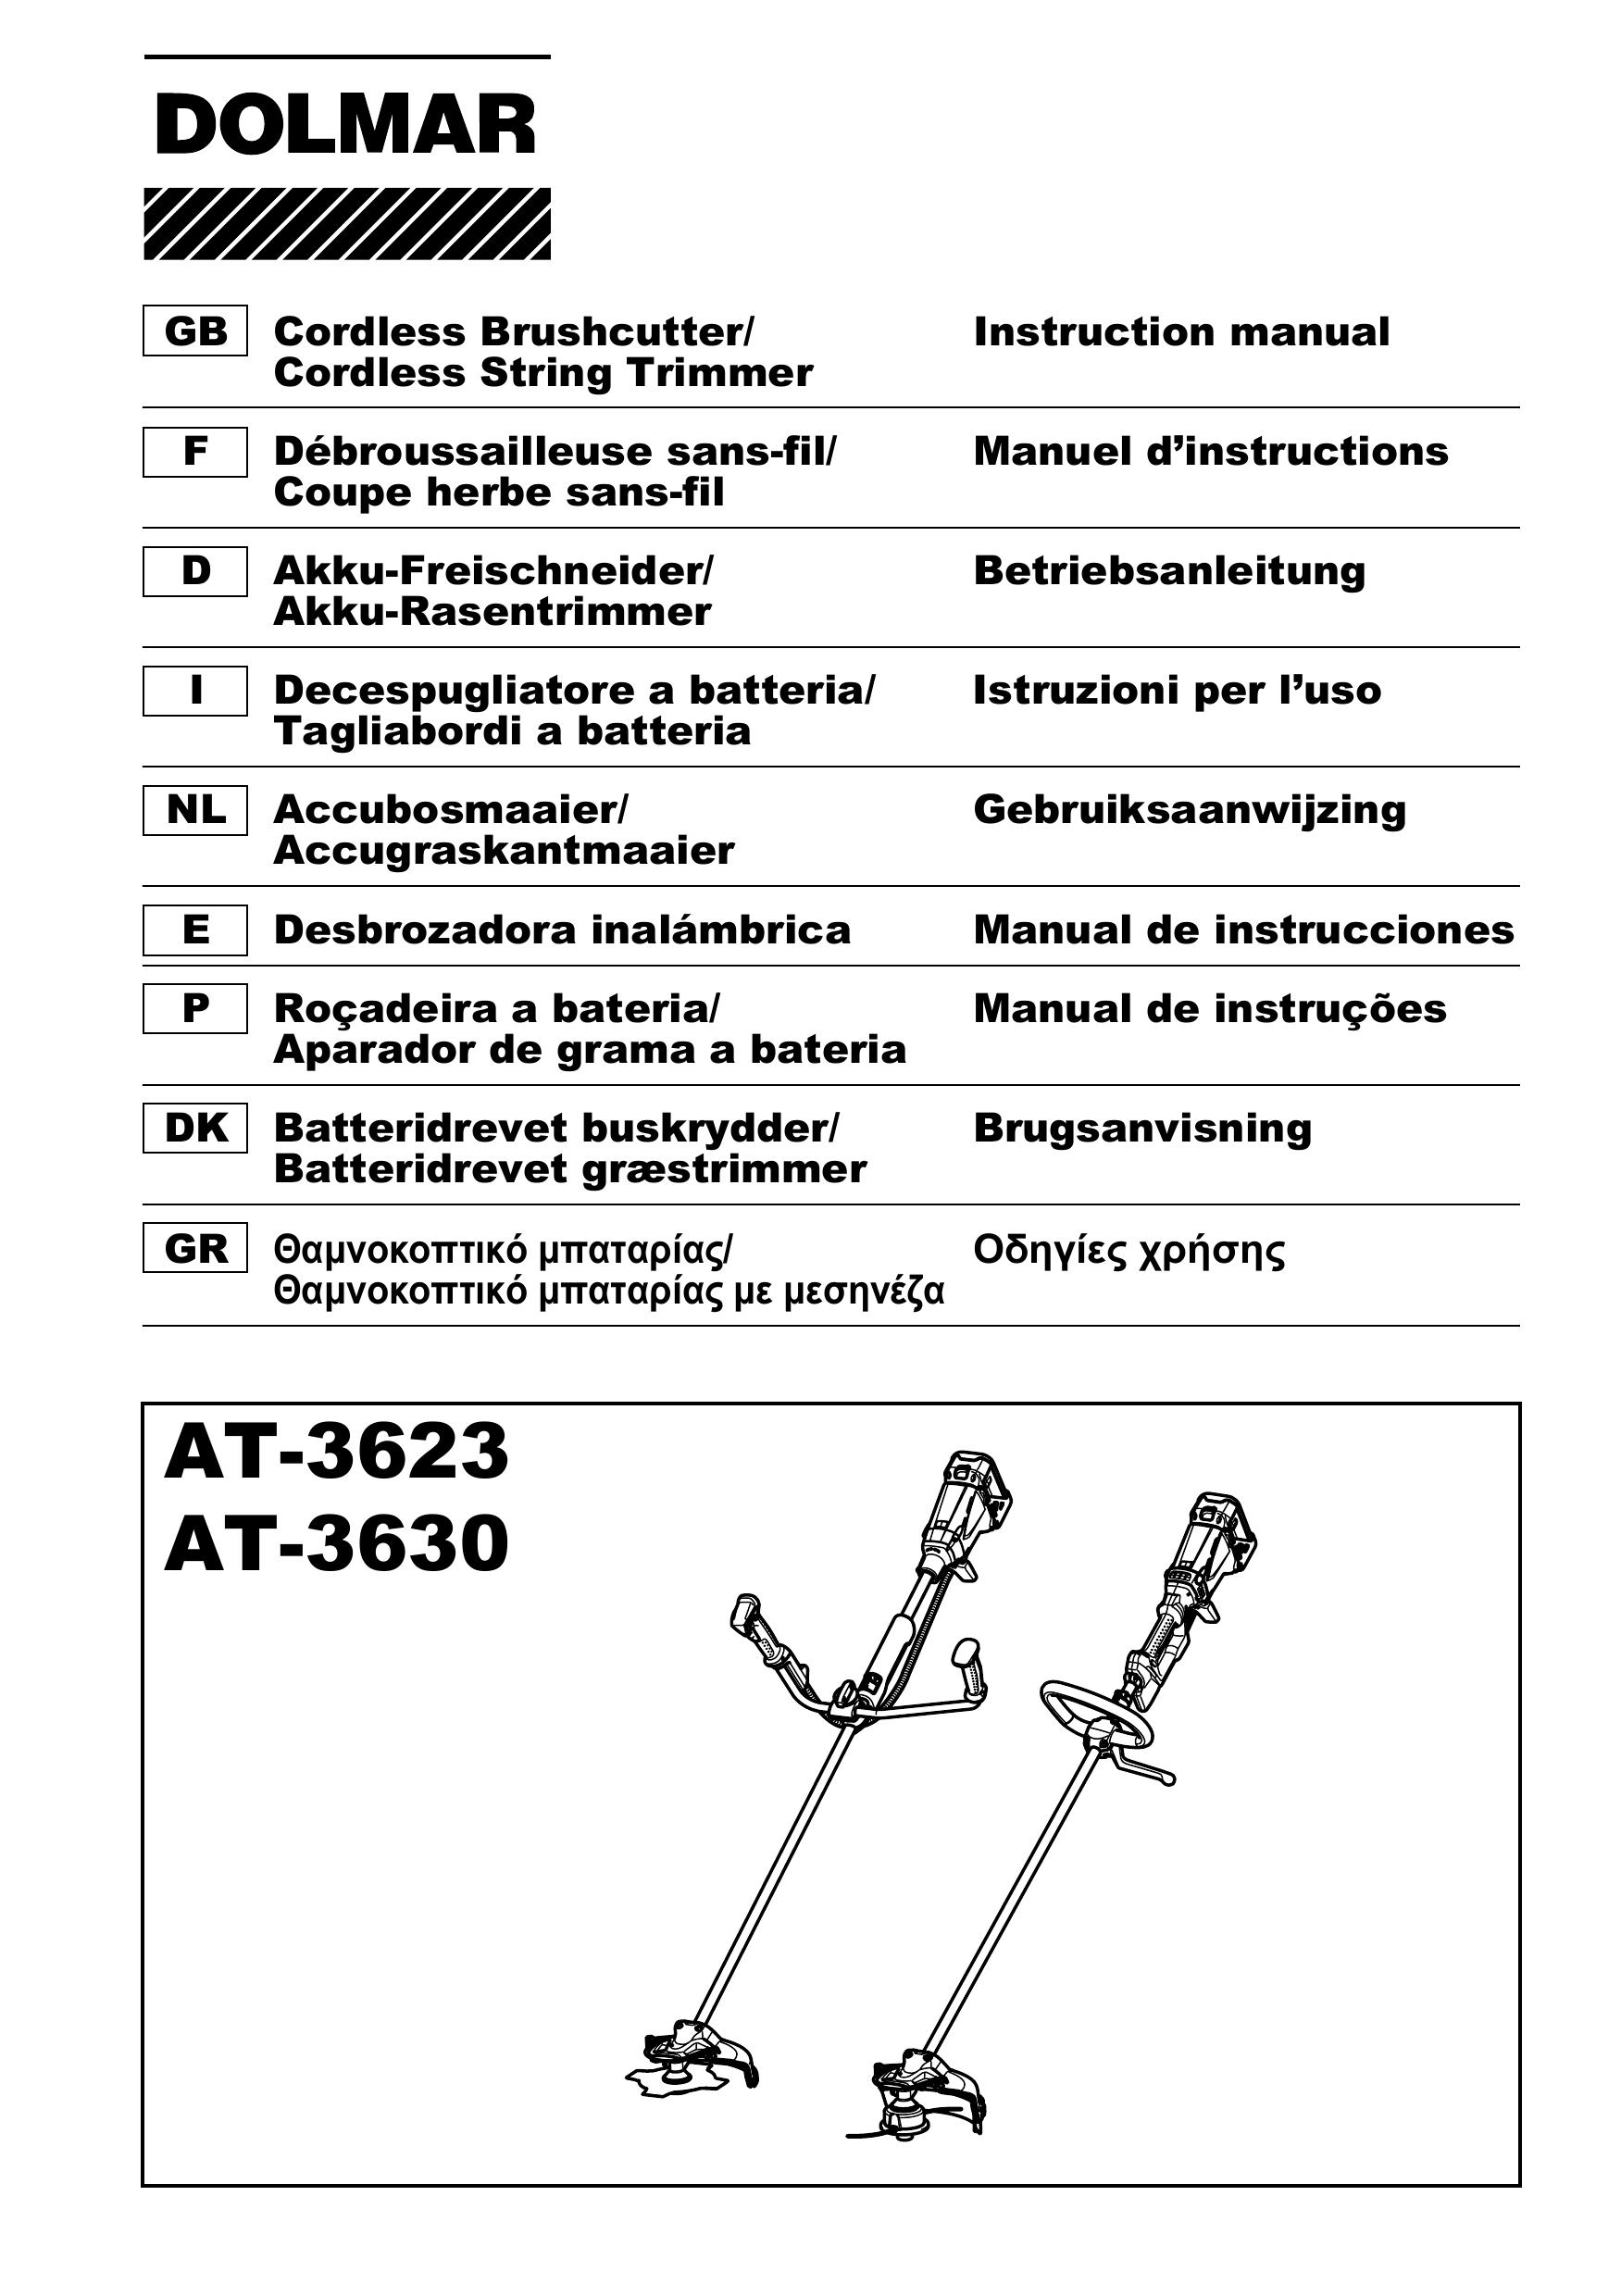 Dolmar AT-3623 Brush Cutter User Manual